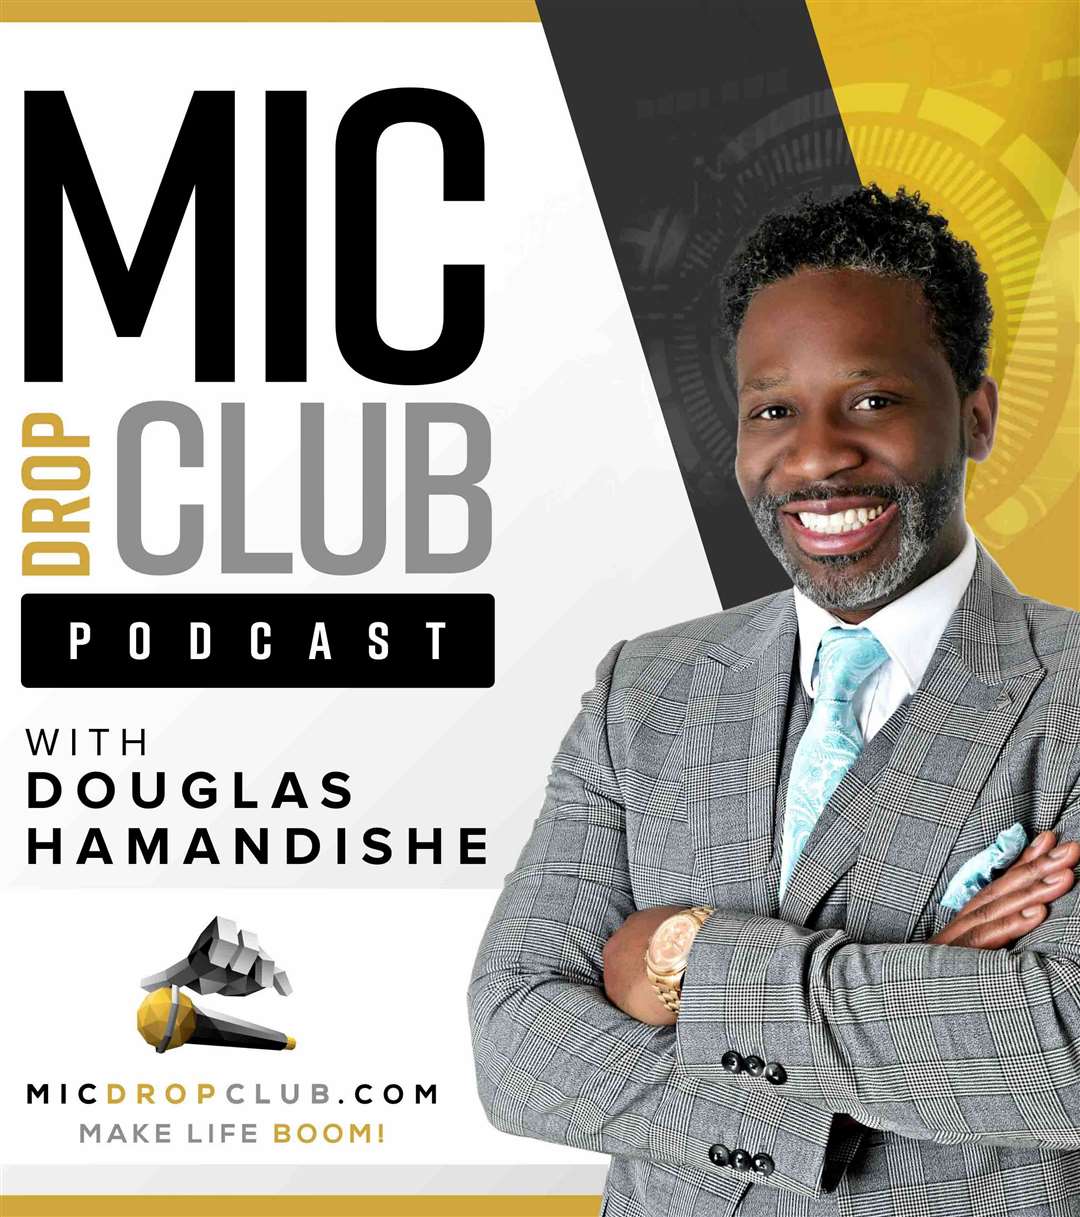 Douglas Hamandishe's Mic Drop Club